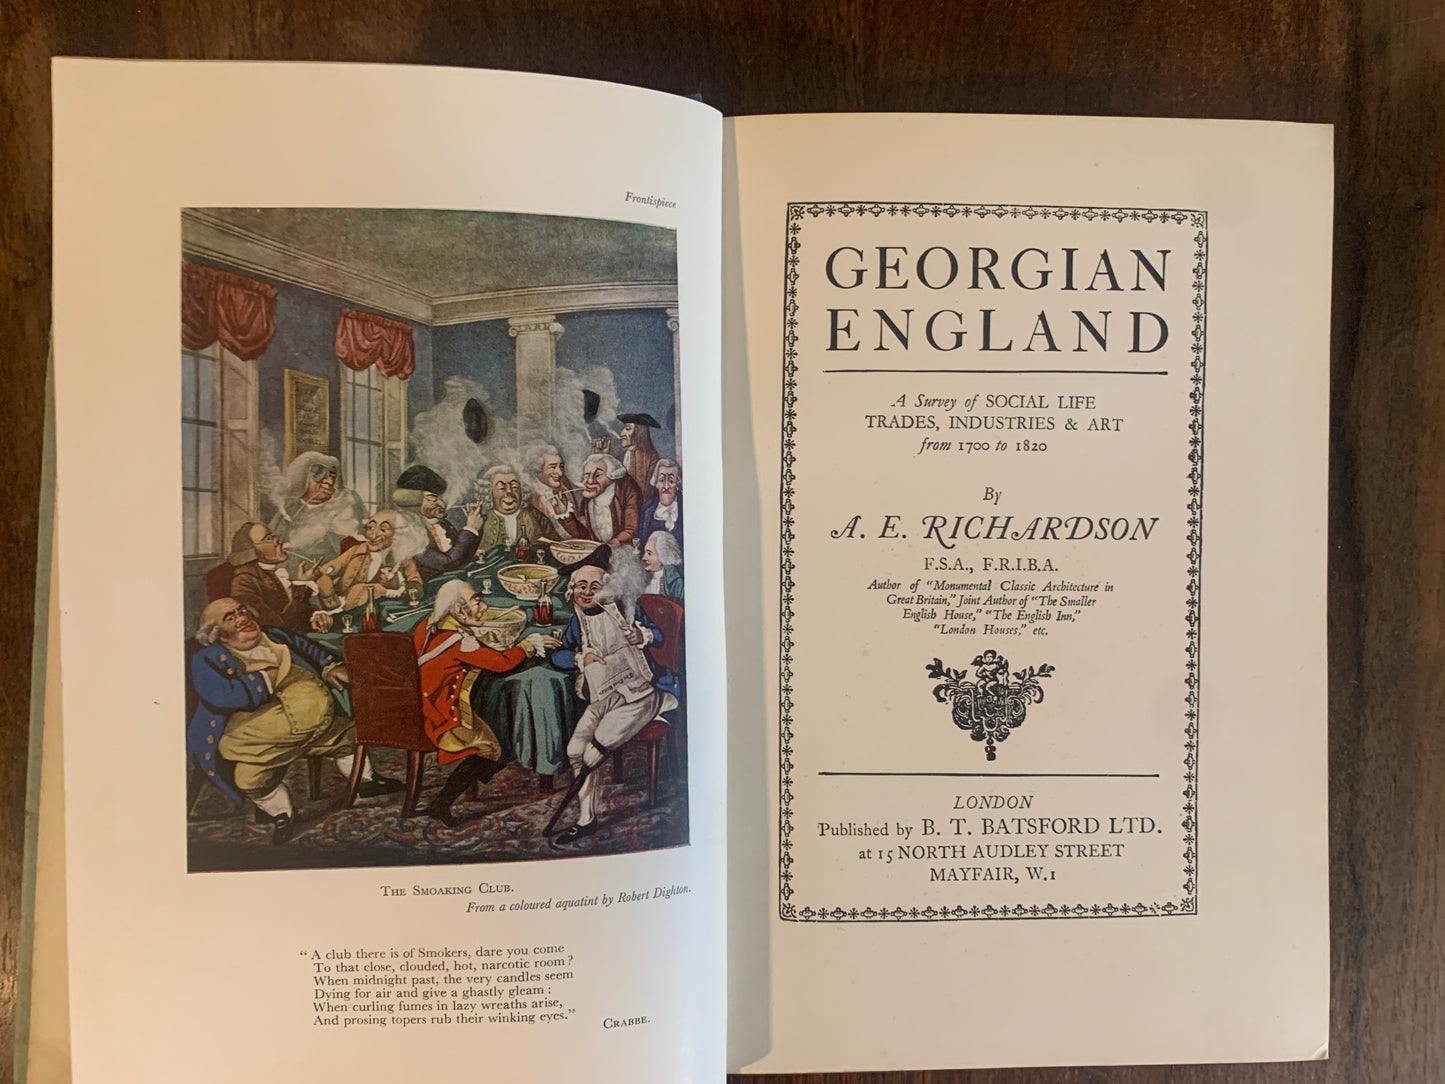 Georgian England: A Survey of Social Life, Trades, Industries & Art by A.E. Richardson 1931